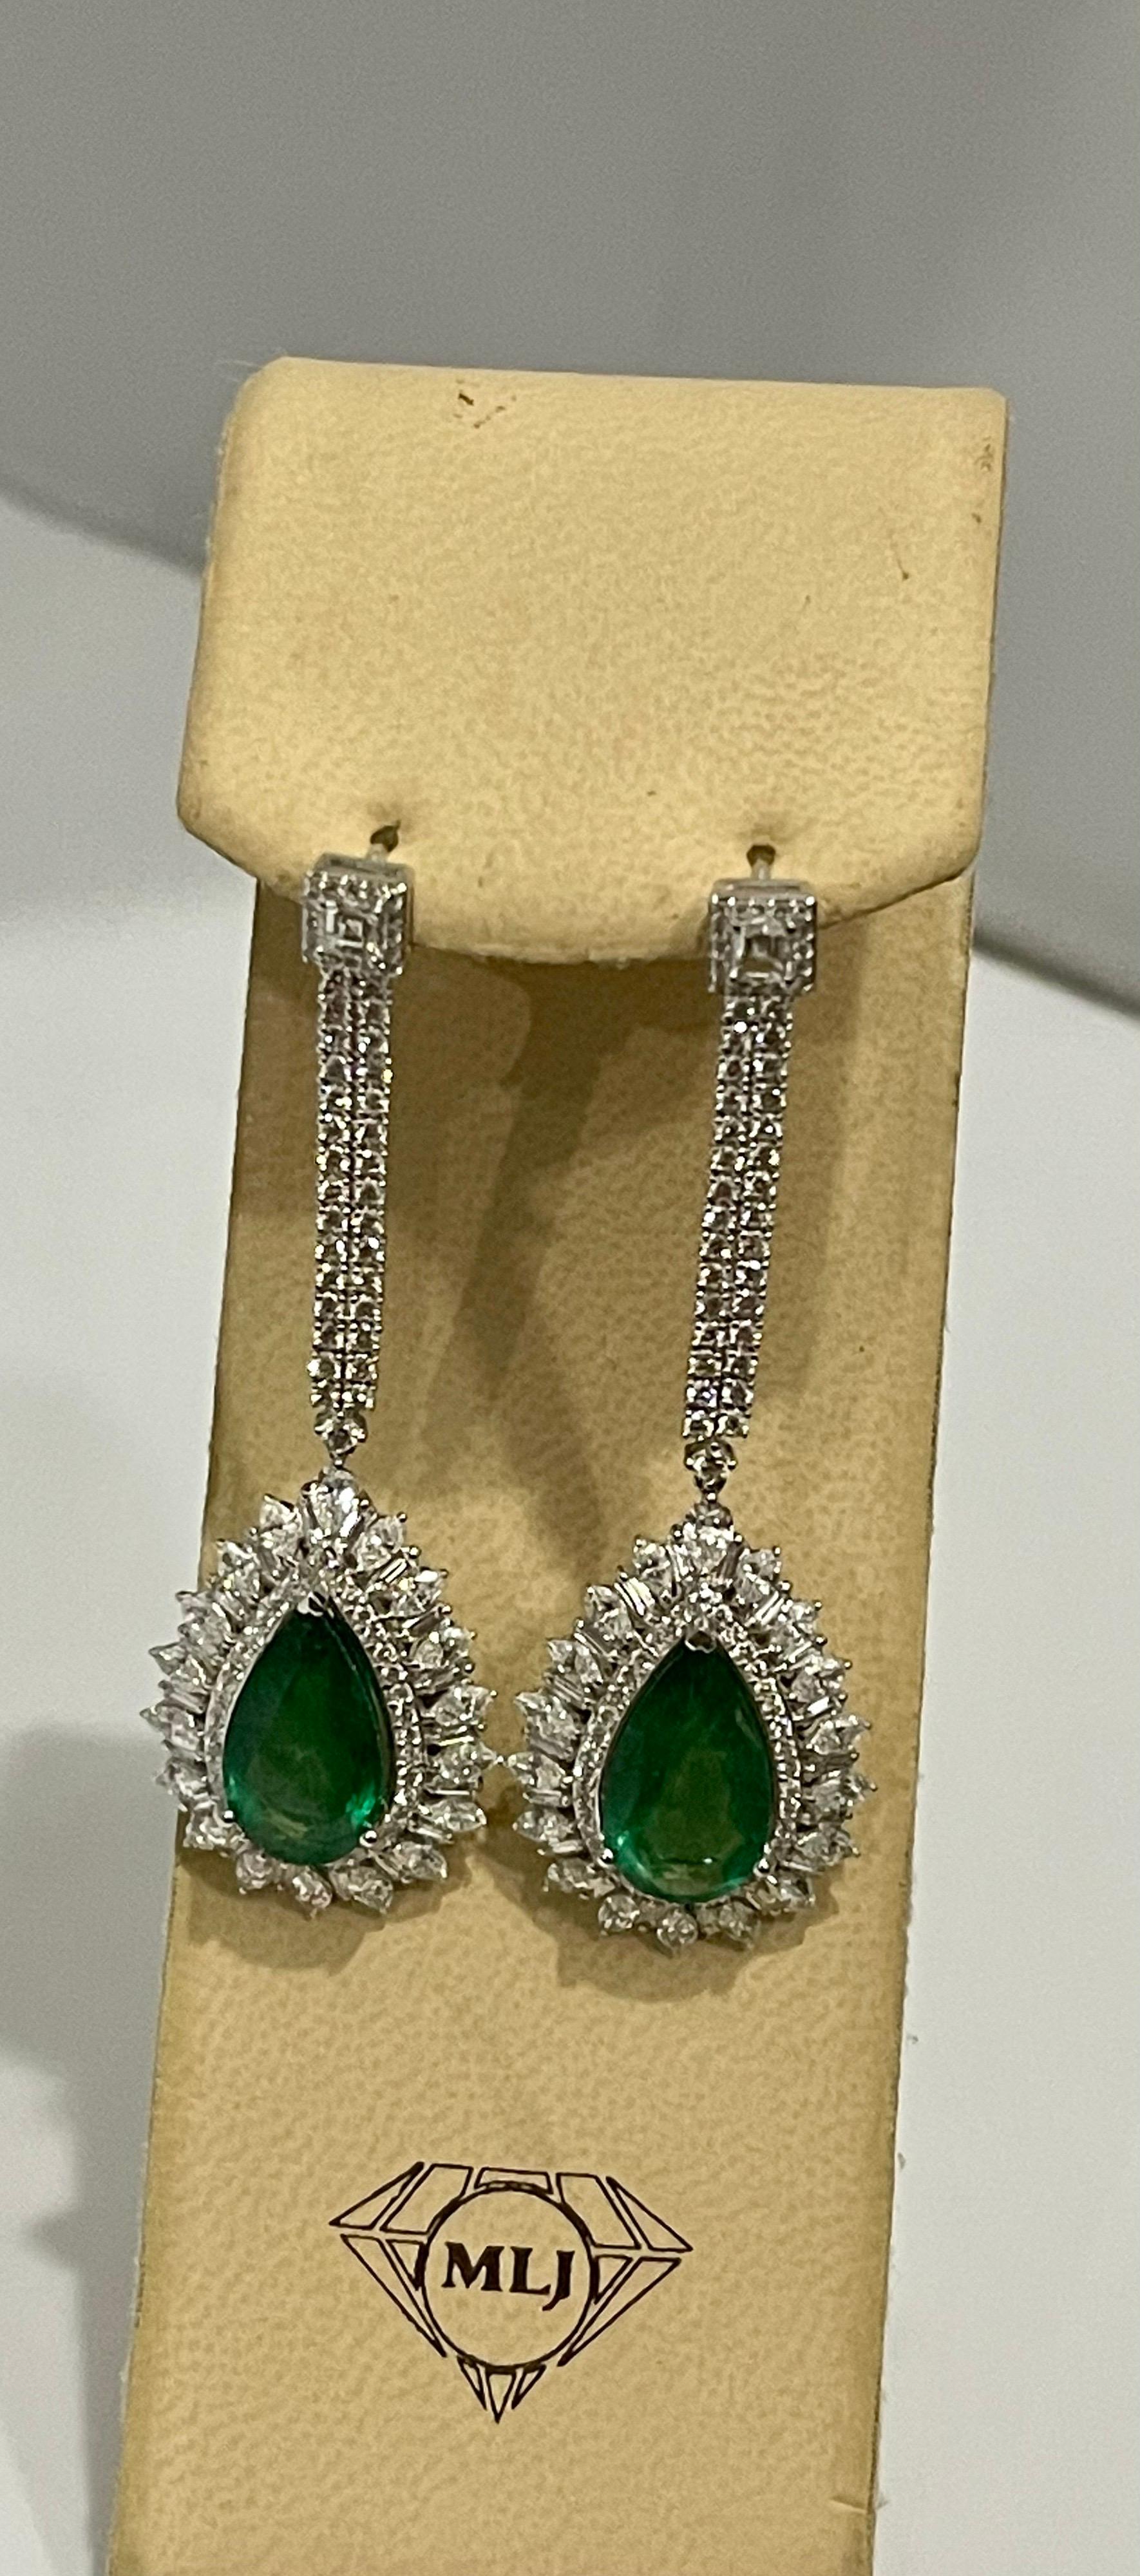 11 Ct Pear Shape Zambian Emerald & 6 Ct Diamonds Drop Earrings 18K White Gold 4